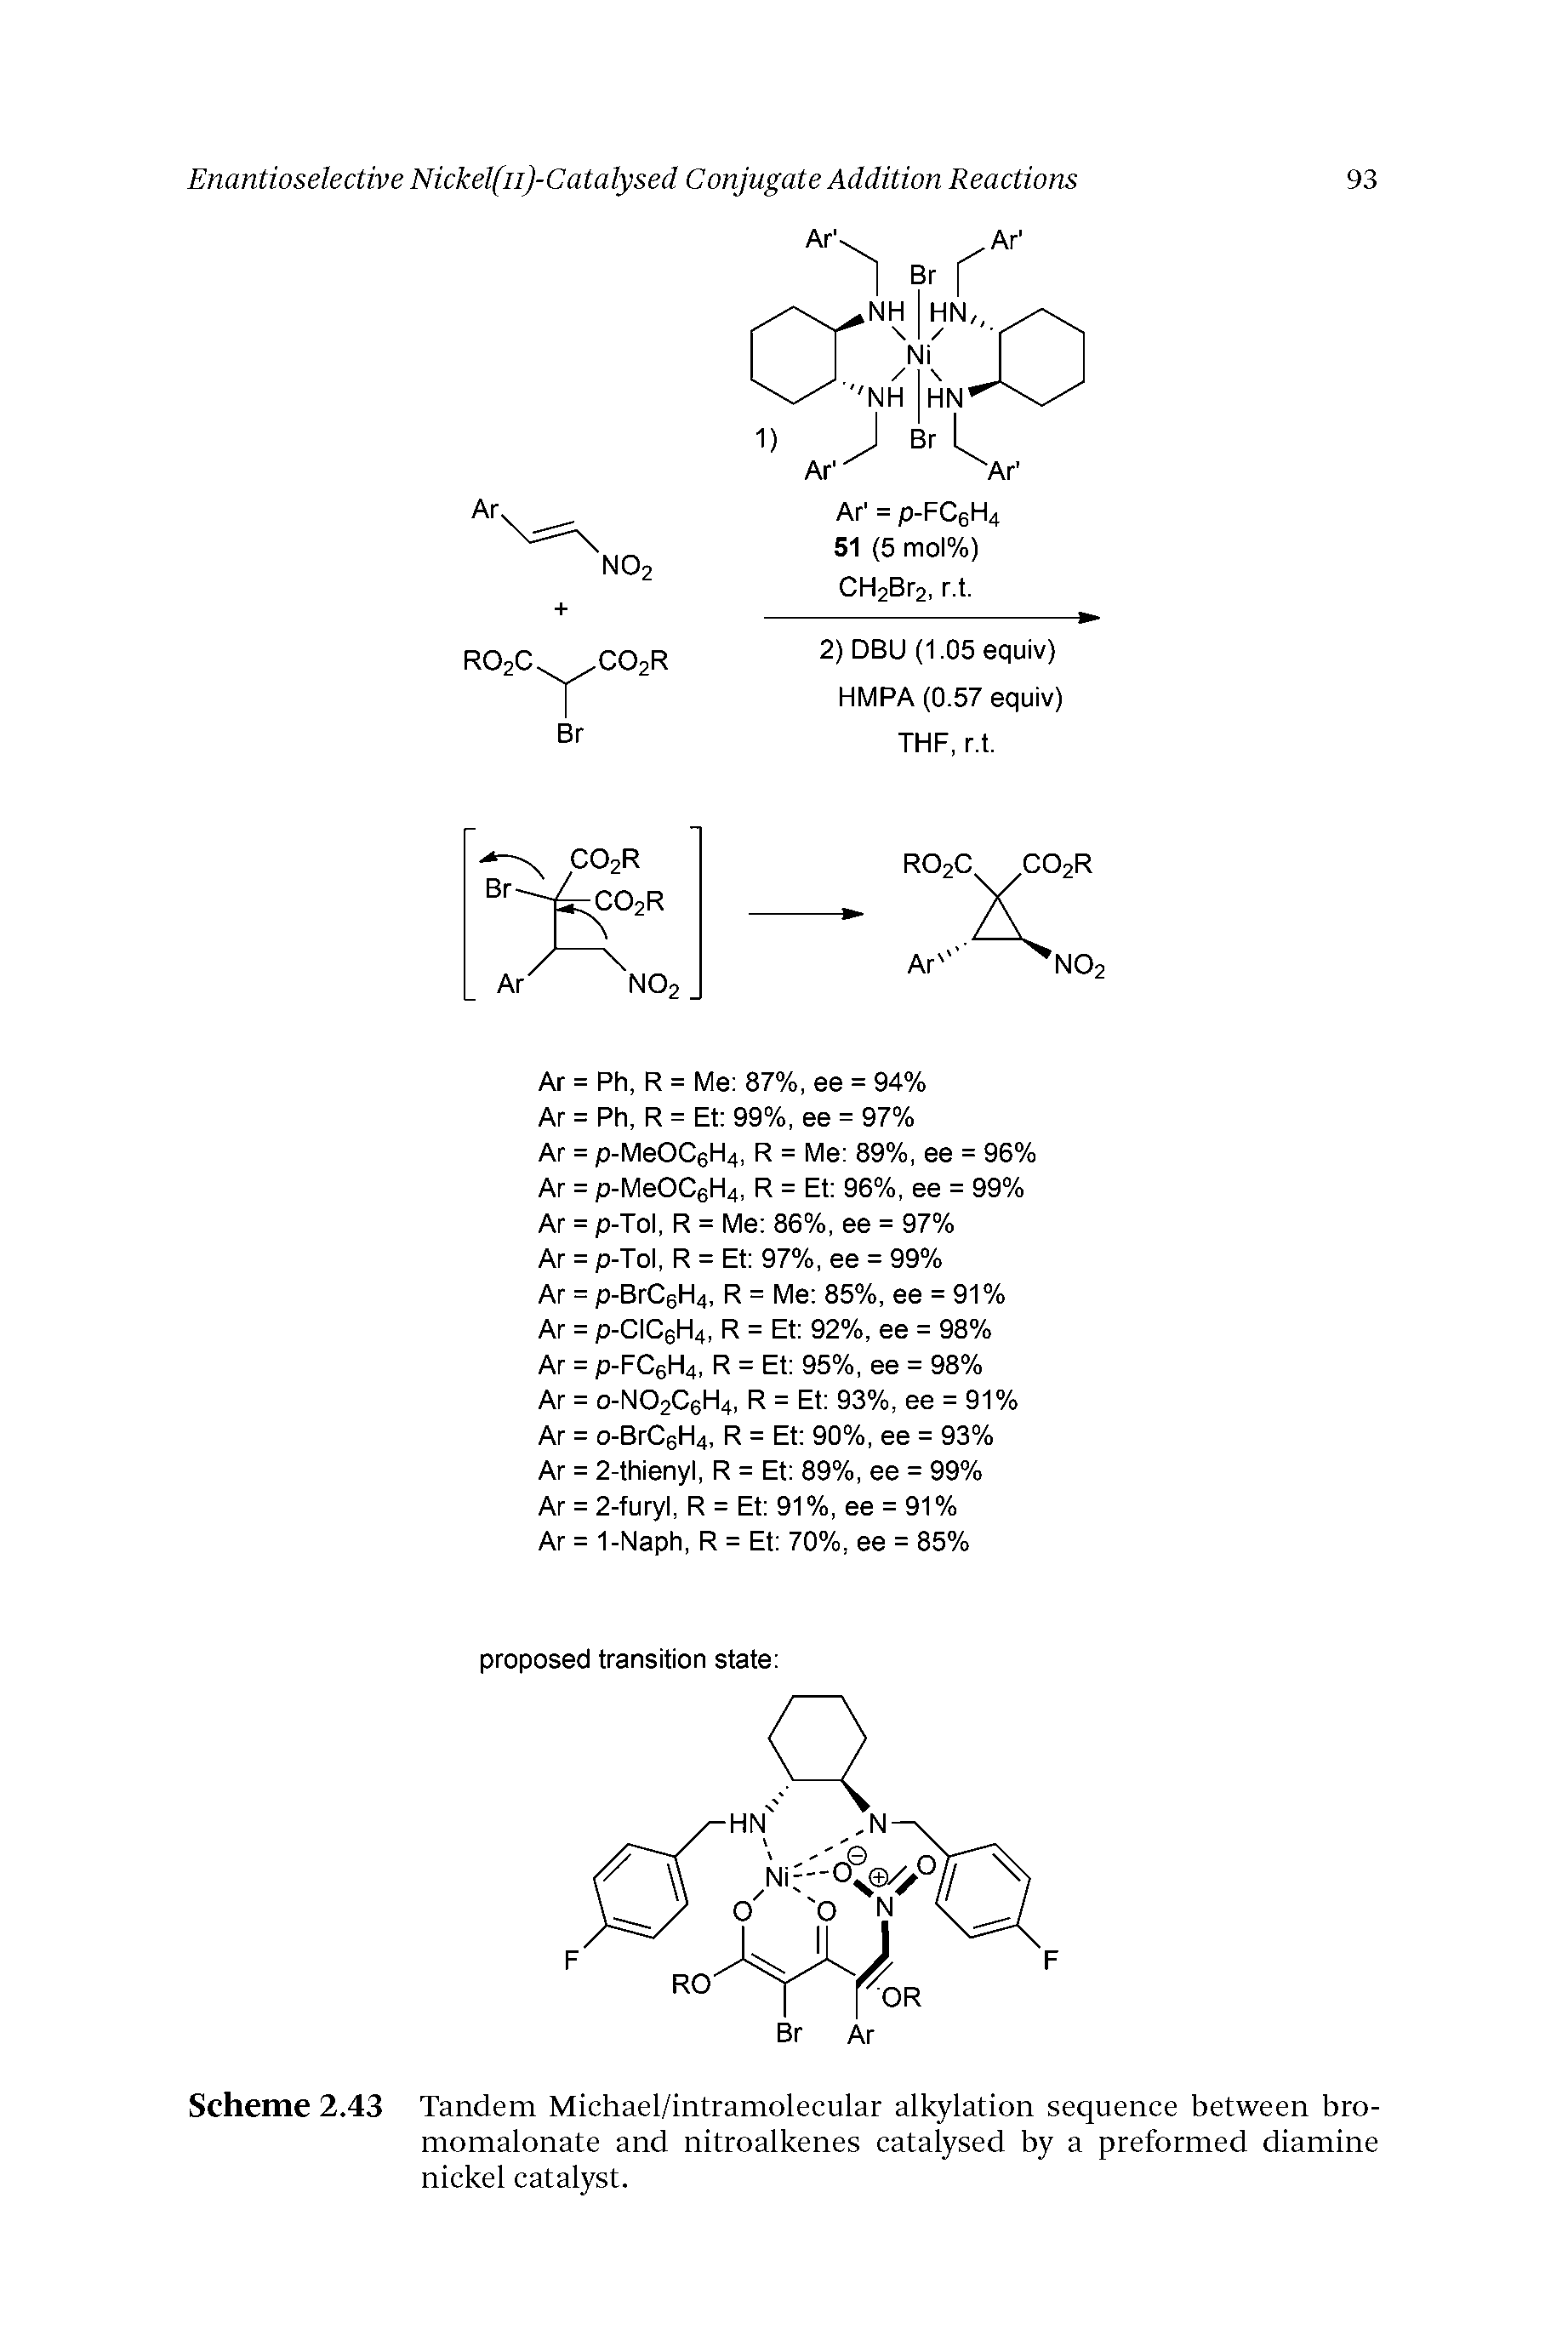 Scheme 2.43 Tandem Michael/intramolecular alkylation sequence between bro-momalonate and nitroalkenes catalysed by a preformed diamine nickel catalyst.